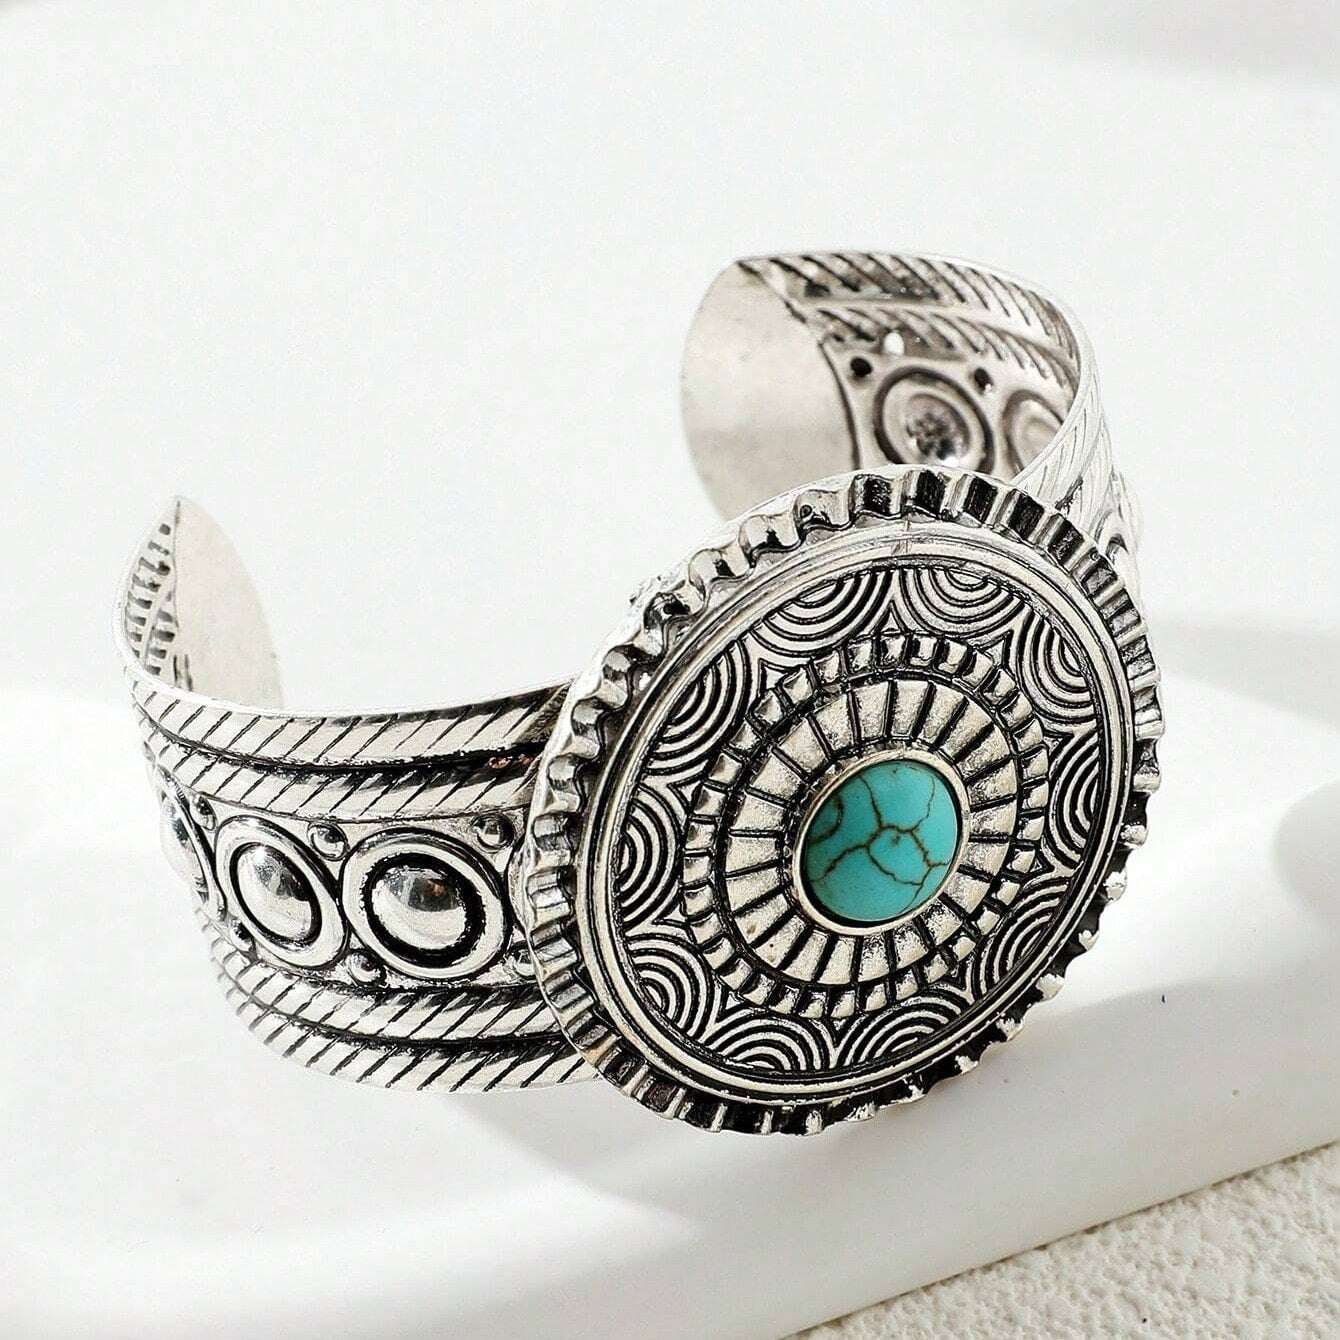 Bratara argintie, stil indian, reglabila, cu piatra turquoise, Petter C9